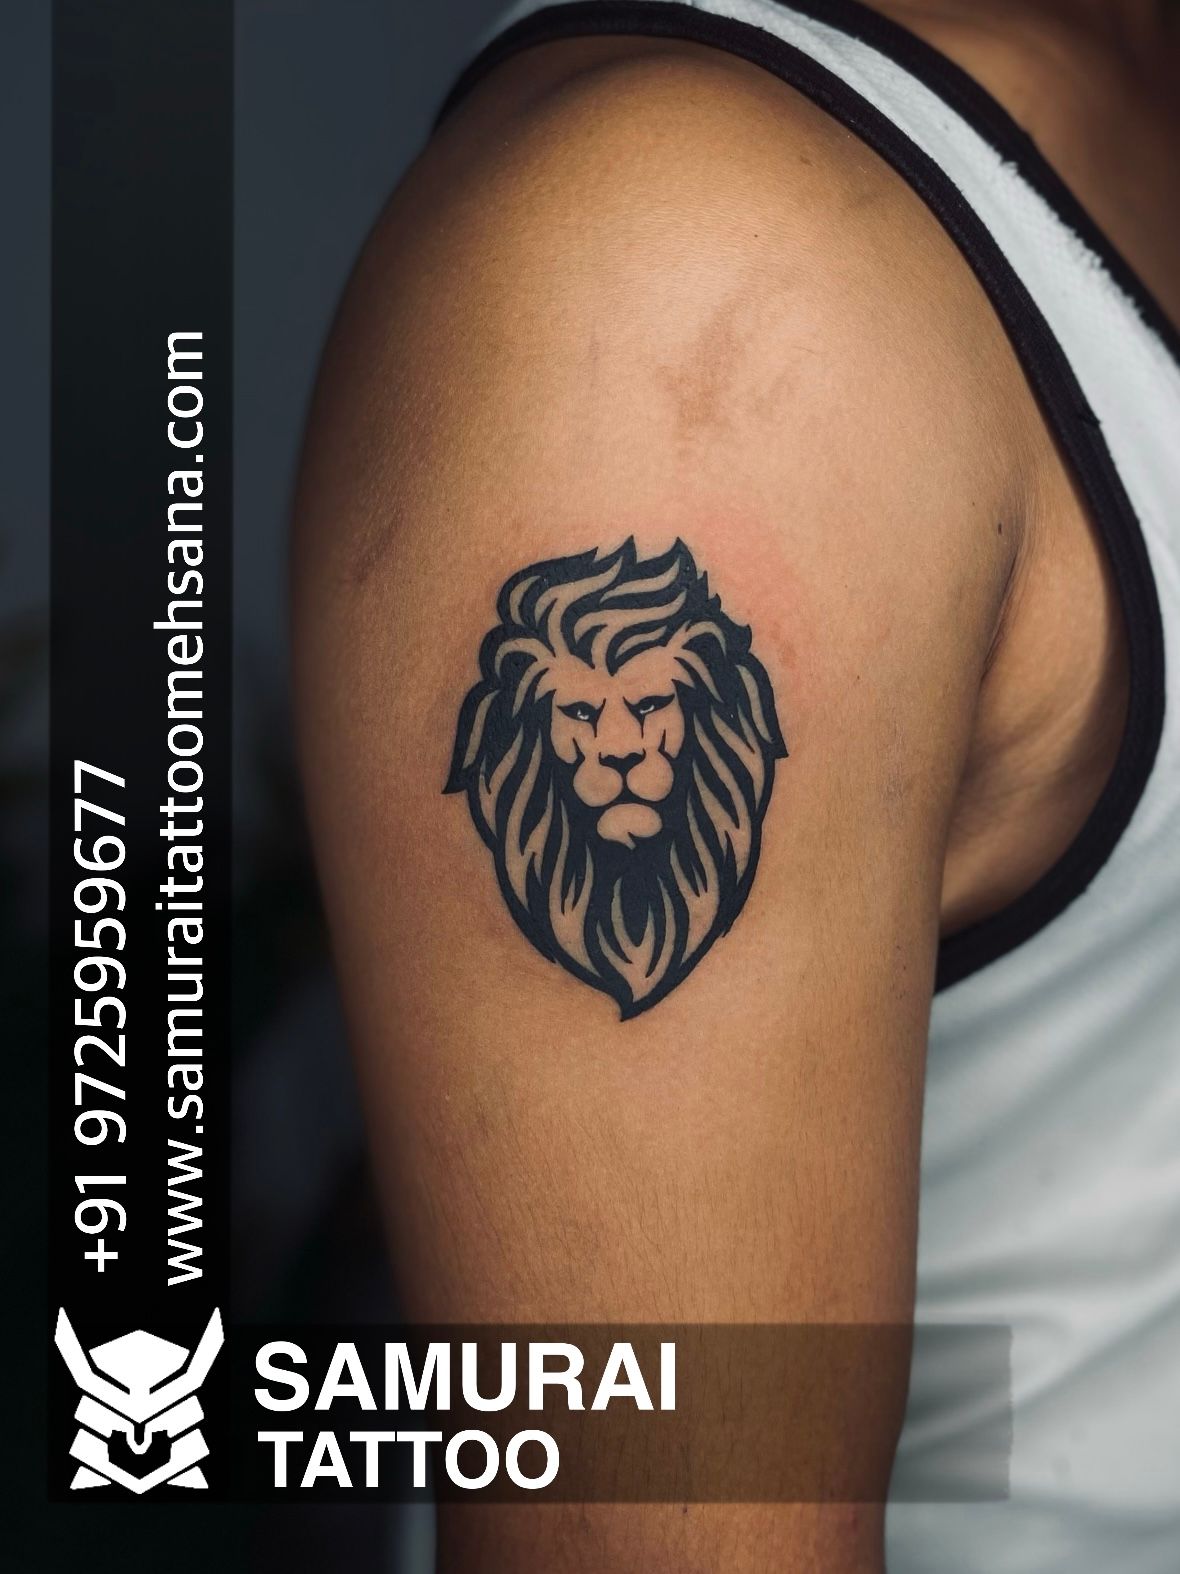 Top 80 Lion Tattoos